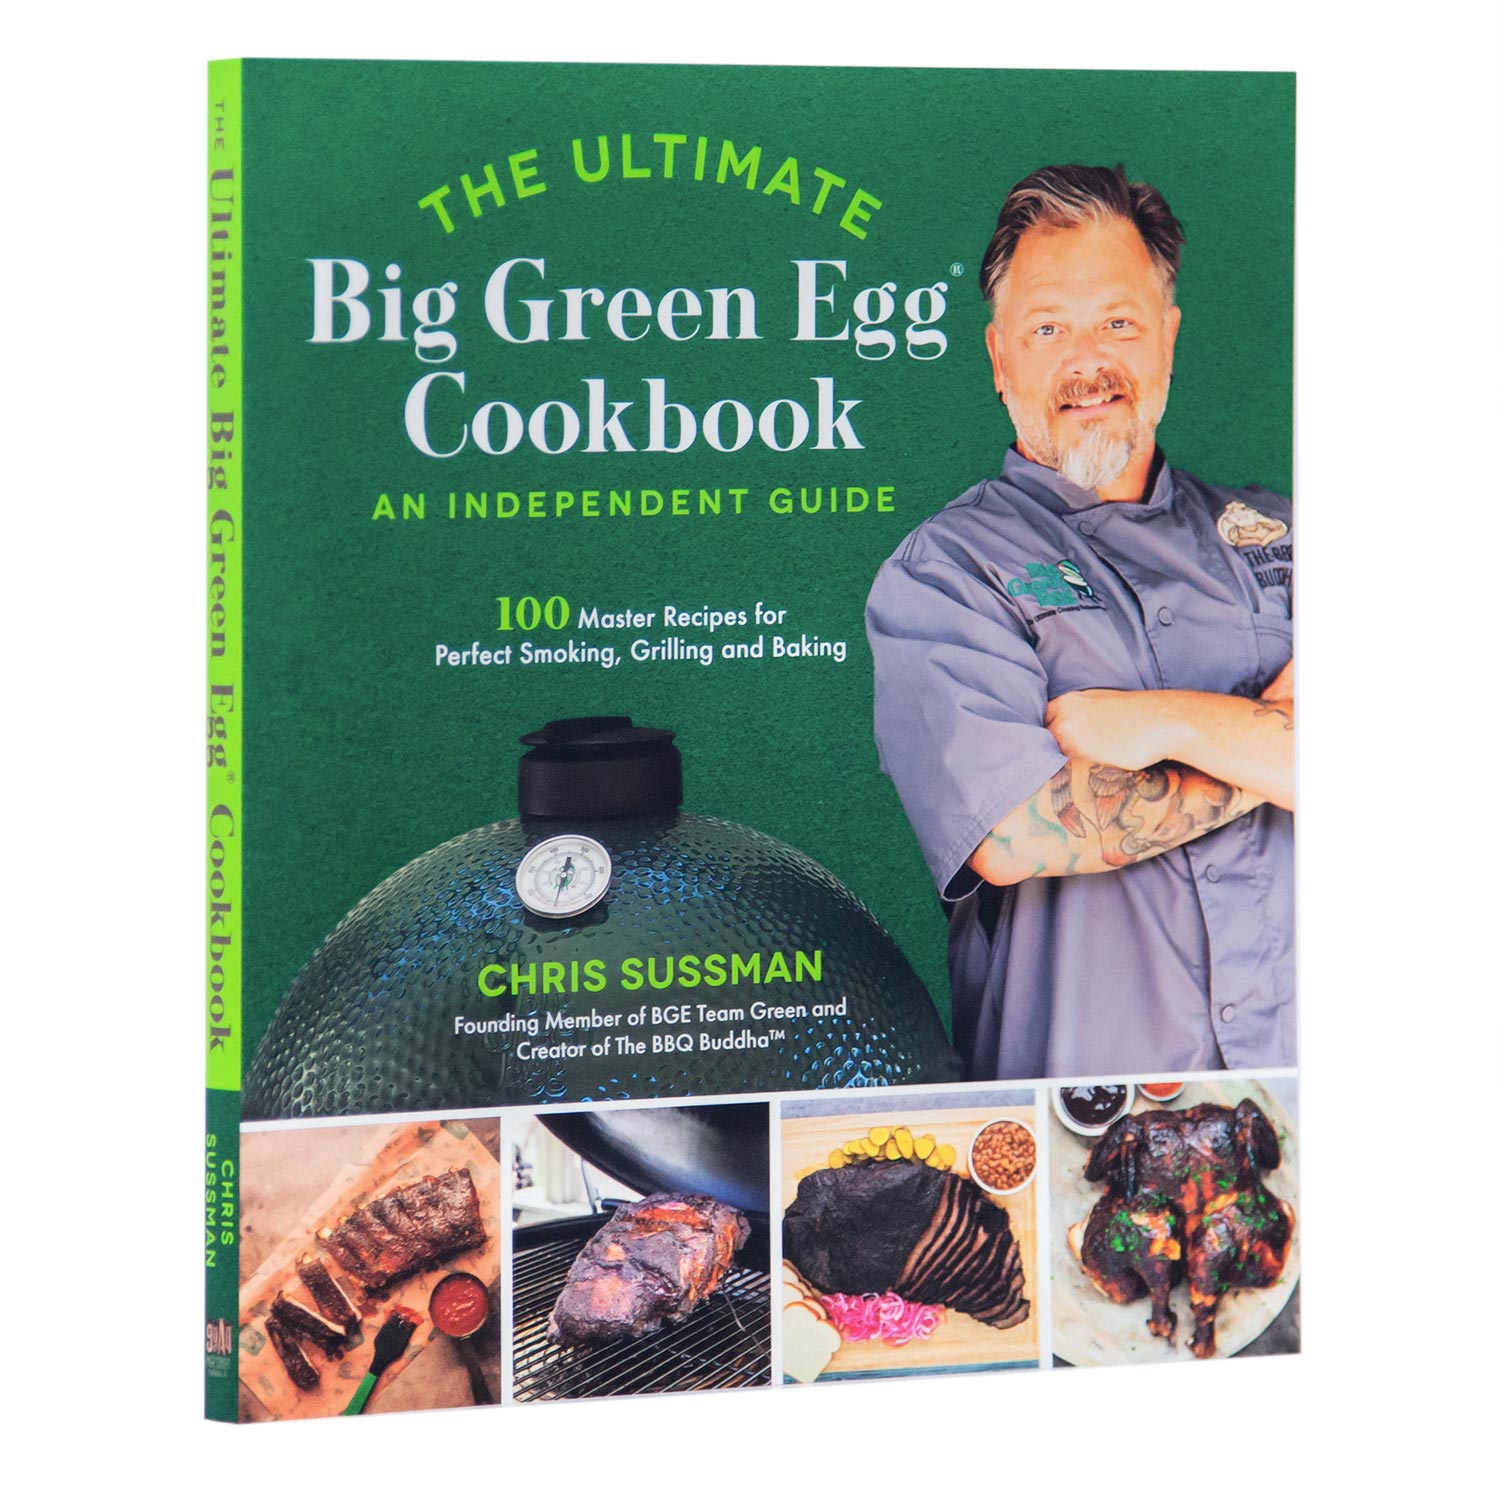 The Ultimate Big Green Egg Cookbook (Chris Sussman aka the BBQ Buddha)